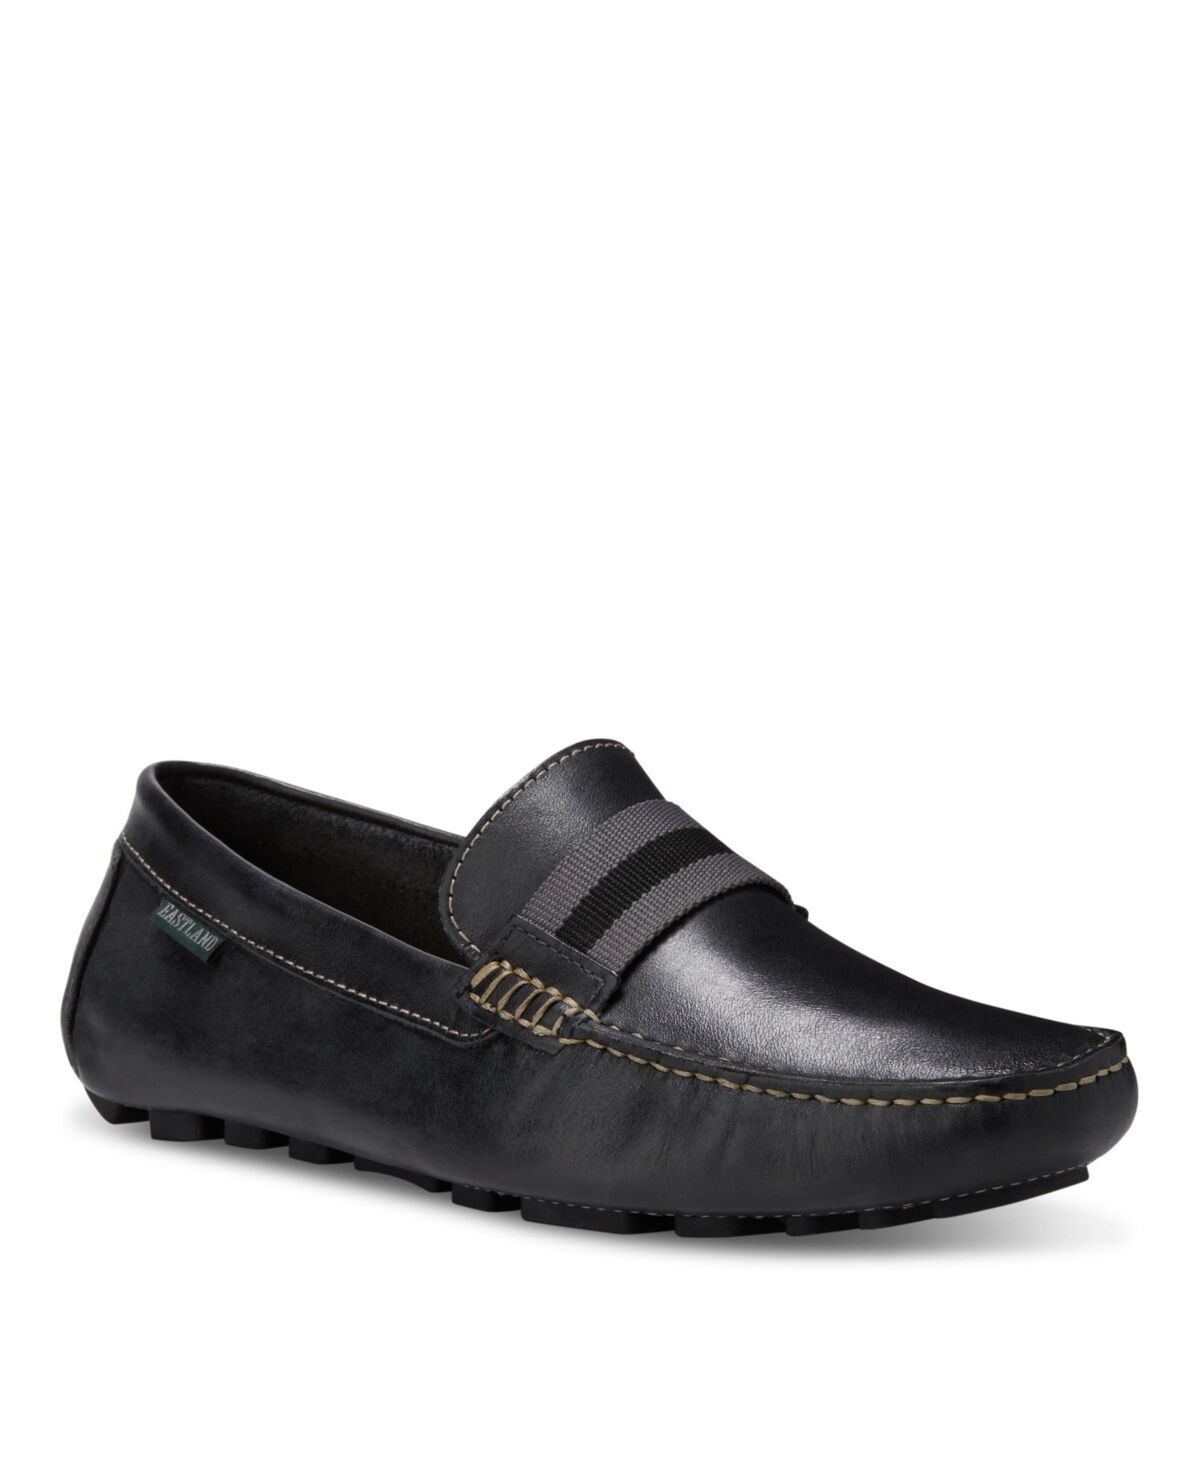 Eastland Shoe Men's Whitman Driving Moc Loafers - Black